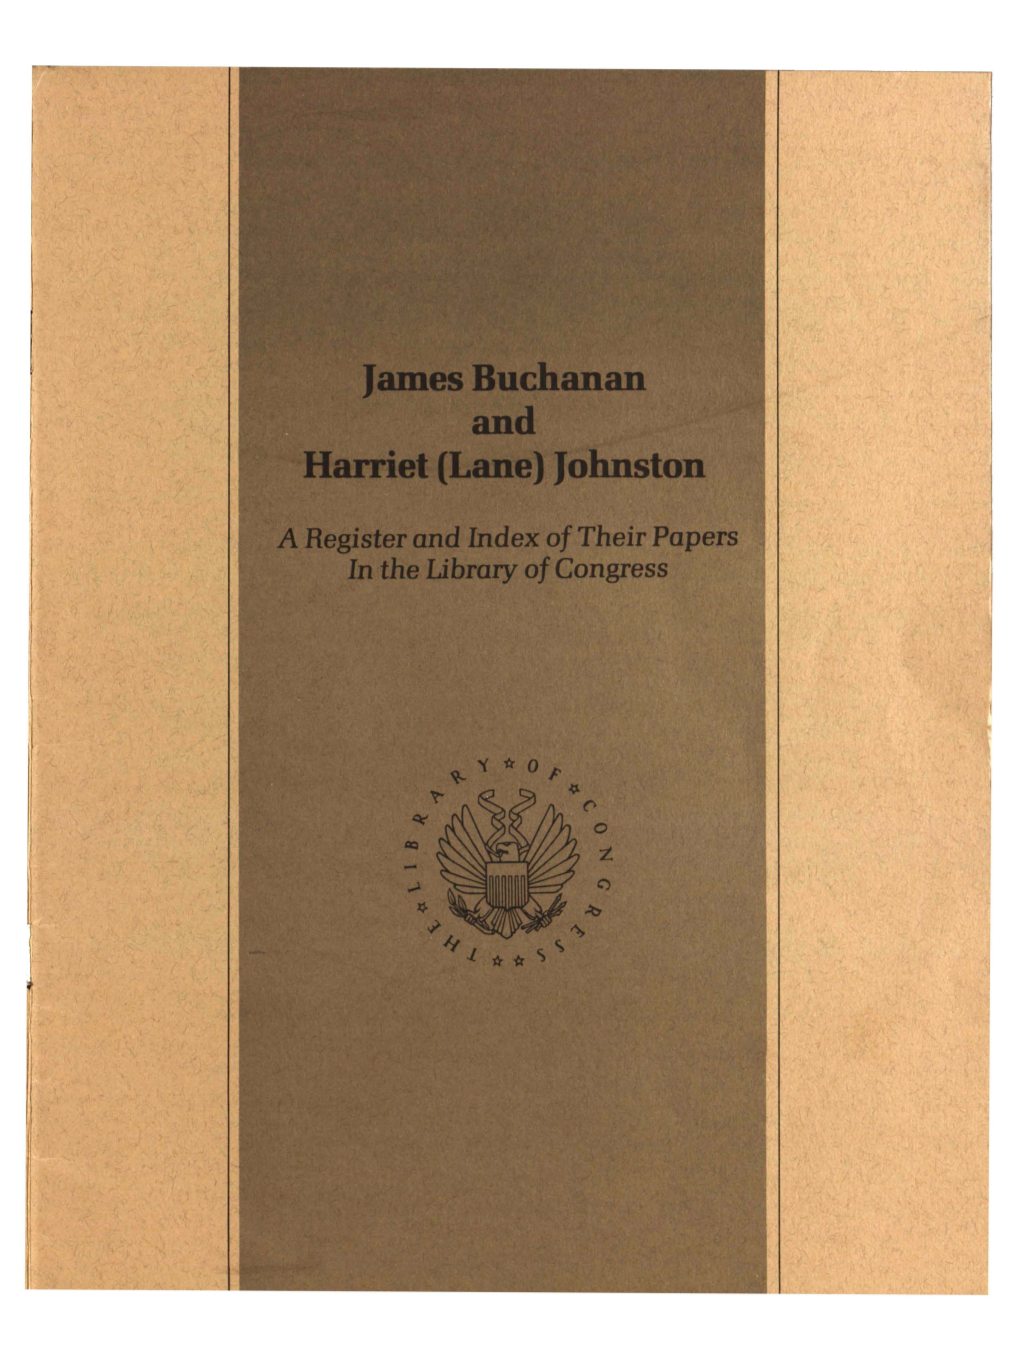 James Buchanan and Harriet (Lane) Johnston